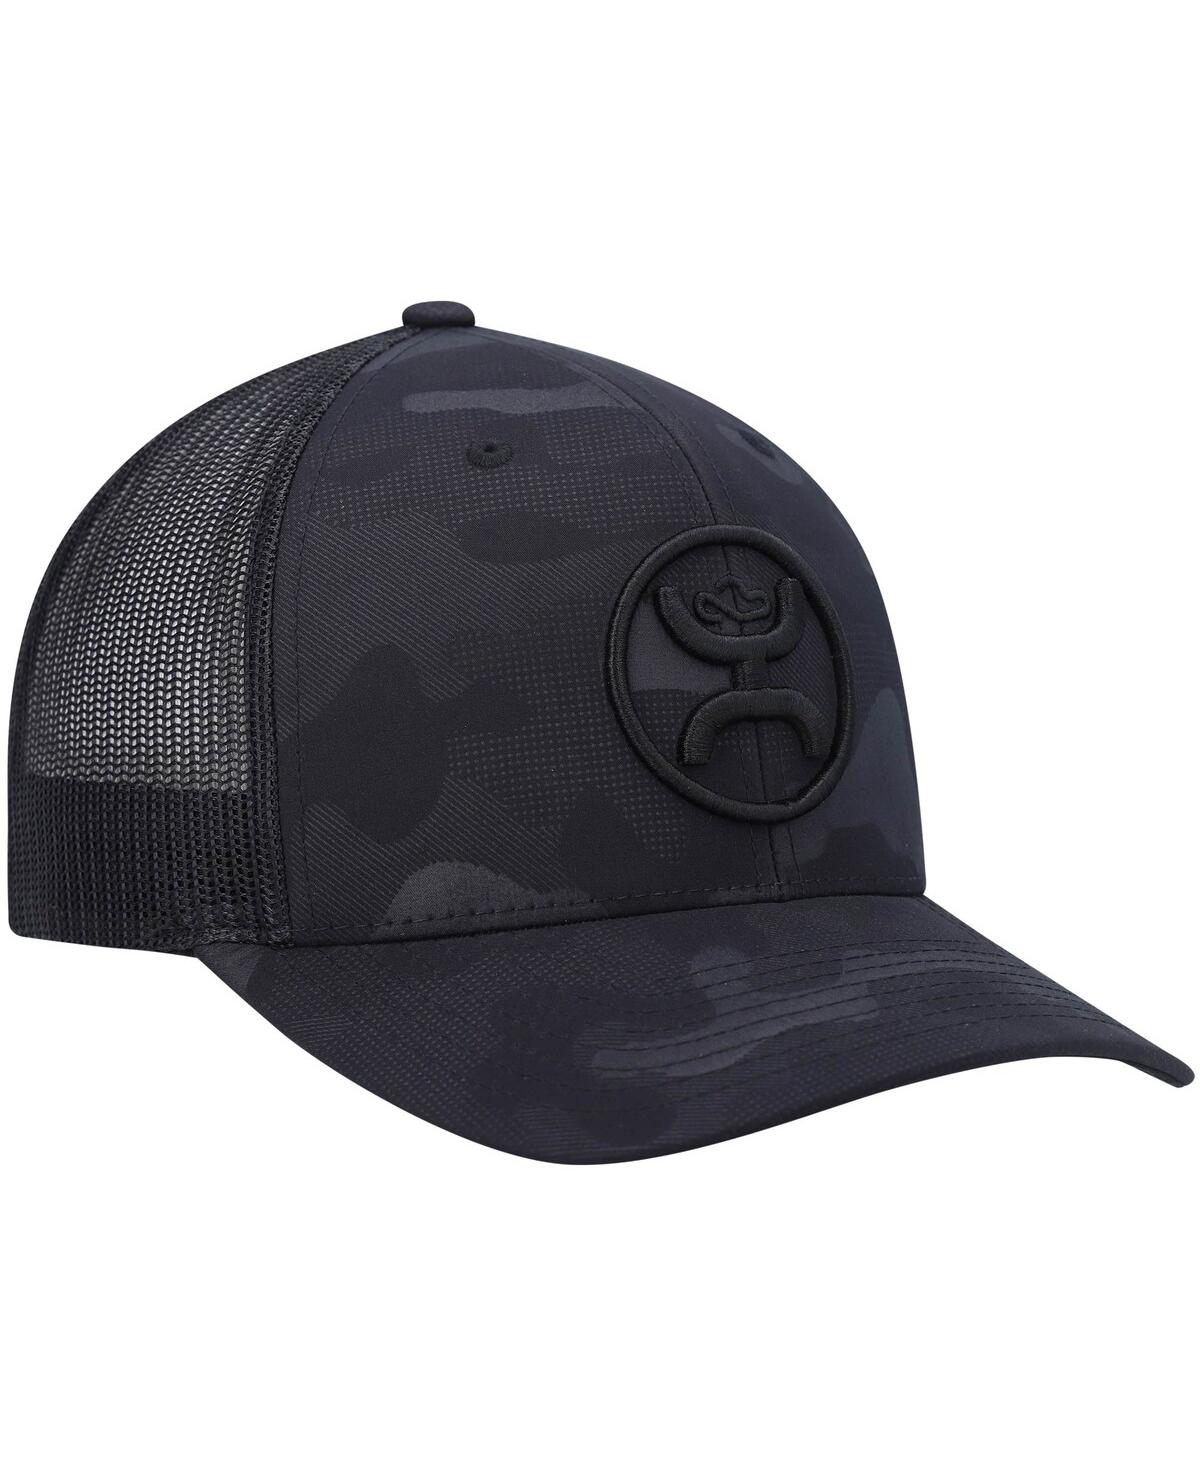 Shop Hooey Men's  Black O-classic Trucker Snapback Hat